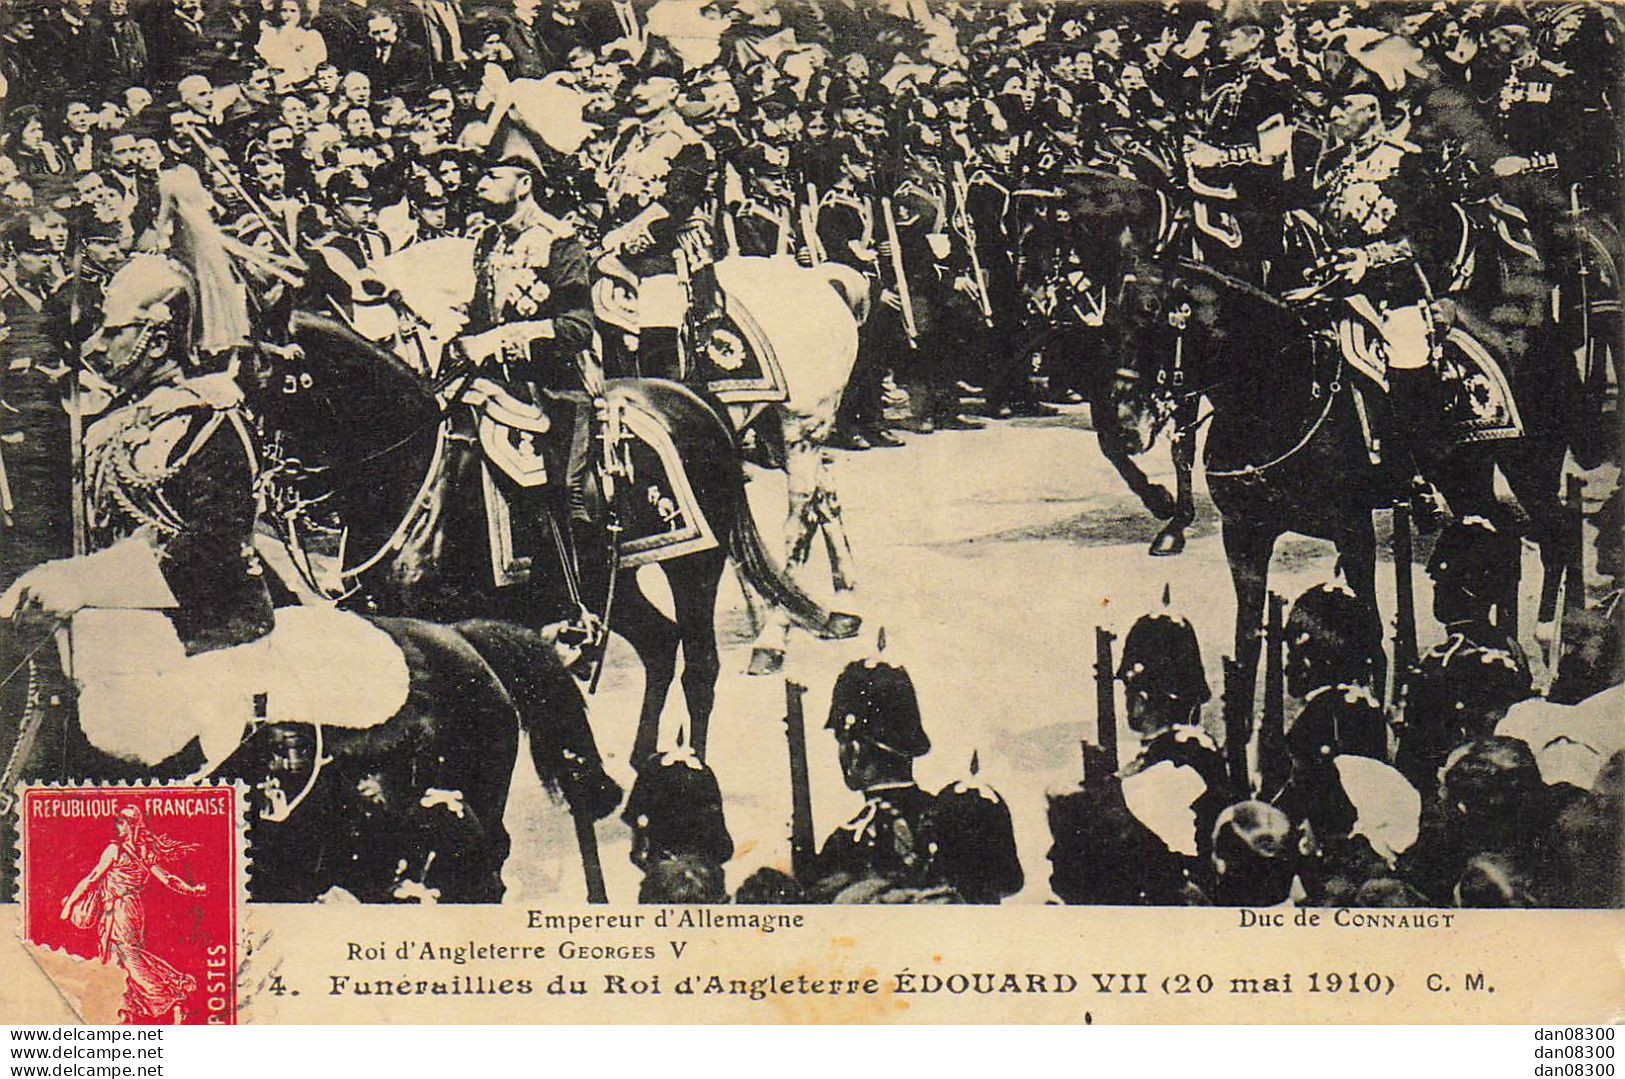 FUNERAILLES DU ROI D'ANGLETERRE EDOUARD VII 20 MAI 1910 EMPEREUR D'ALLEMAGNE ROI D"ANGLETERRE GEORGES V DUC DE CONNAUGT - Begrafenis